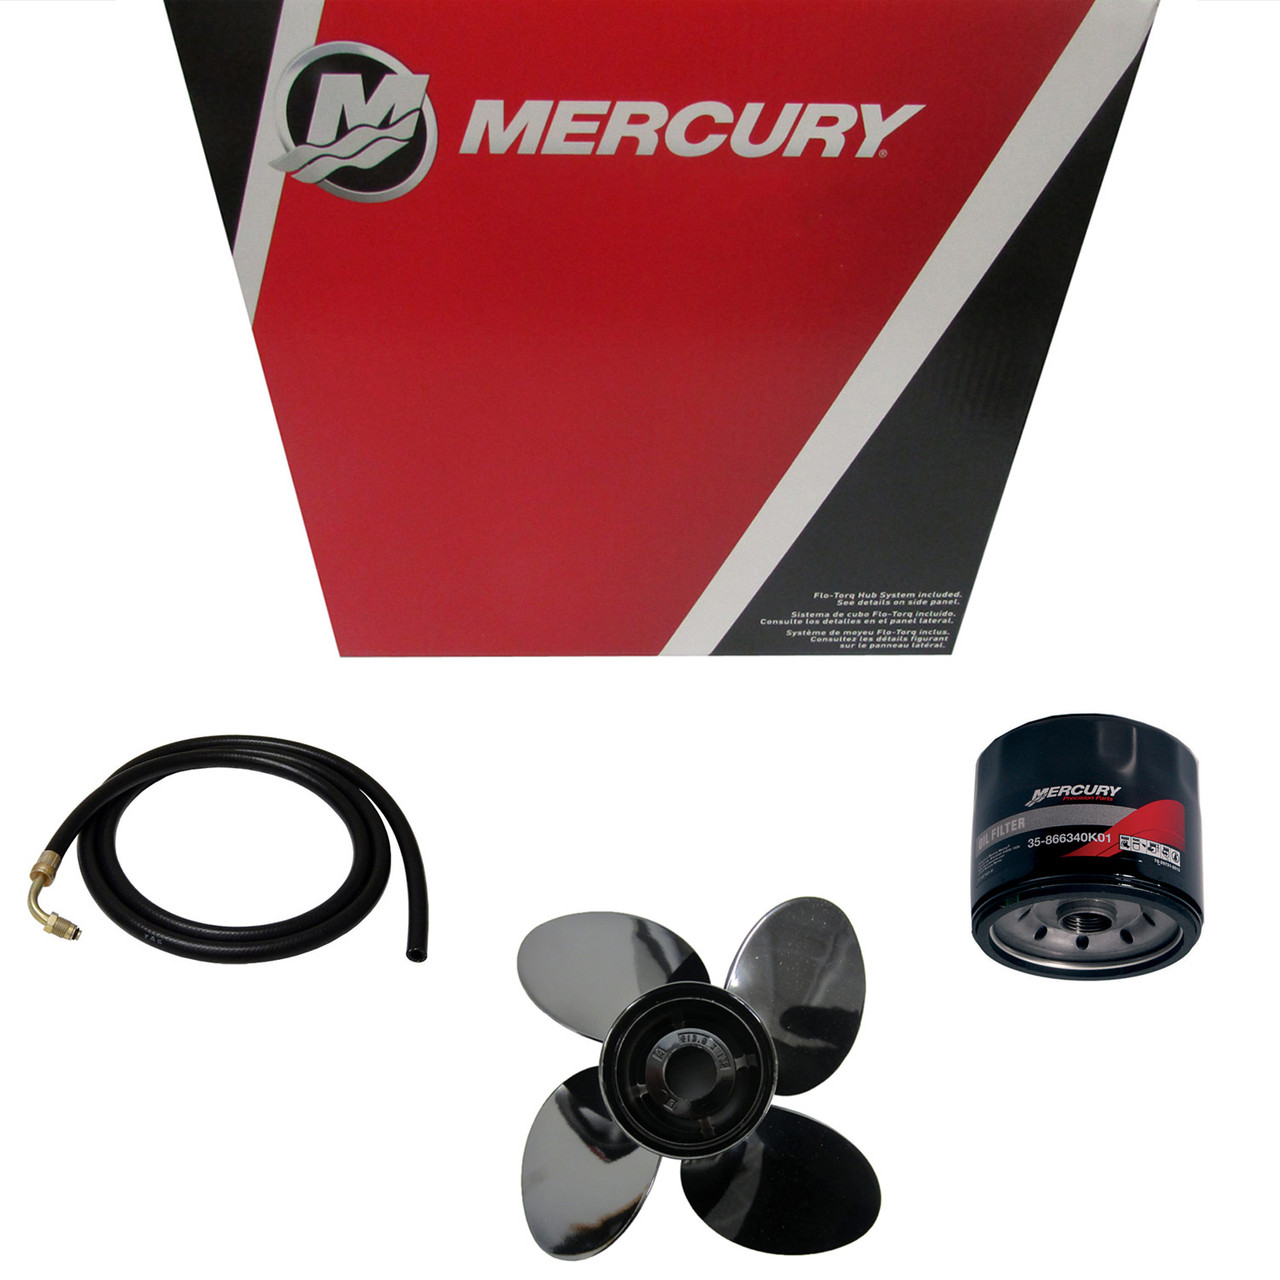 Mercury Marine / Mercruiser New OEM Alignment Tool Kt, 91-805475A1